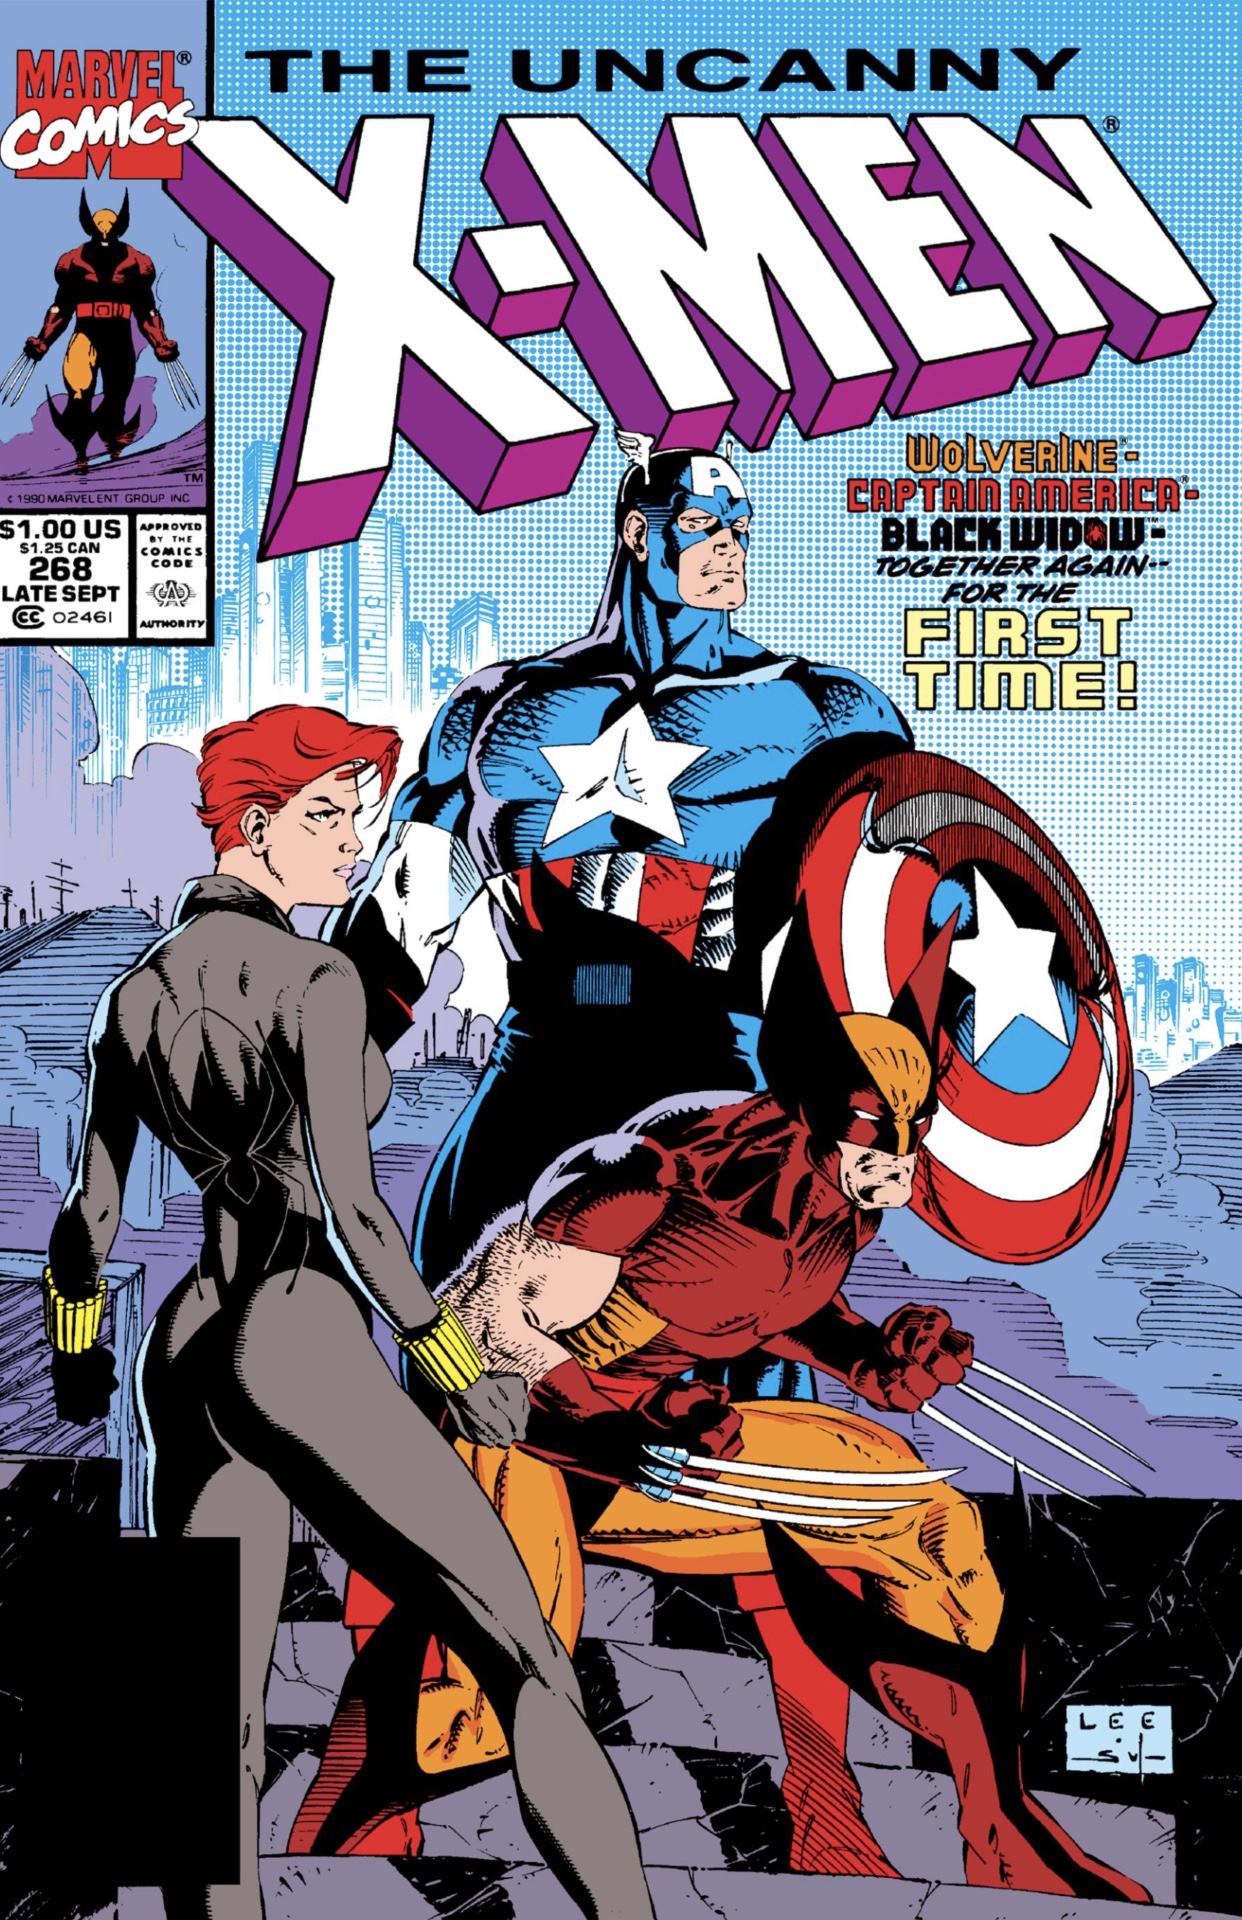 Portada de Uncanny X-Men #268 por Jim Lee